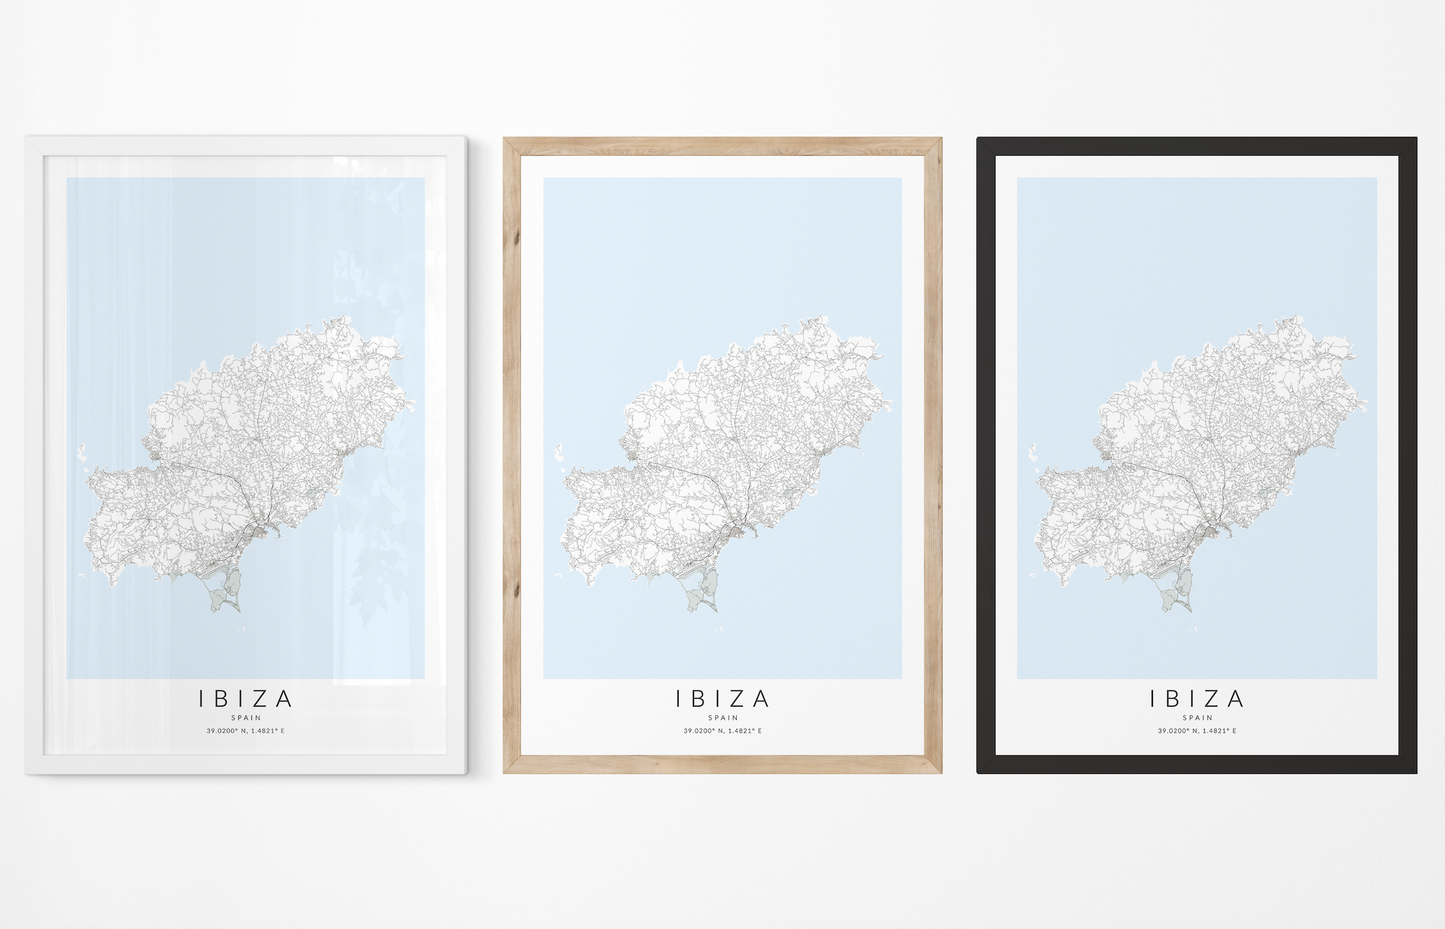 Ibiza Spain Map Print